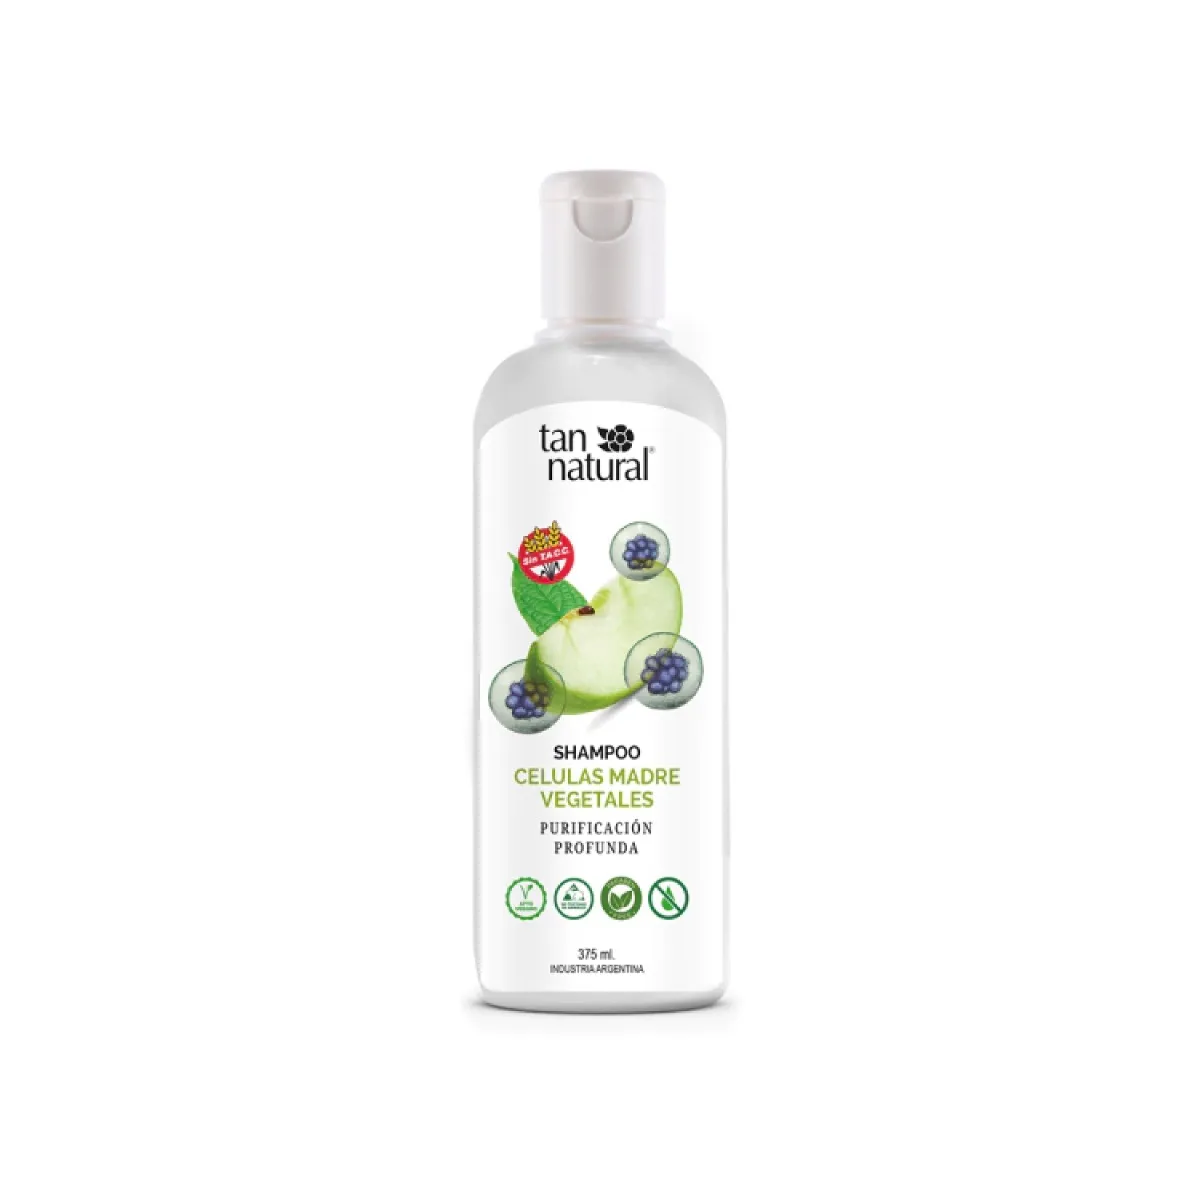 7794260008915-shampoo-celulas-madre-vegetales-tan-natural-purificacion-profunda-x-375-ml